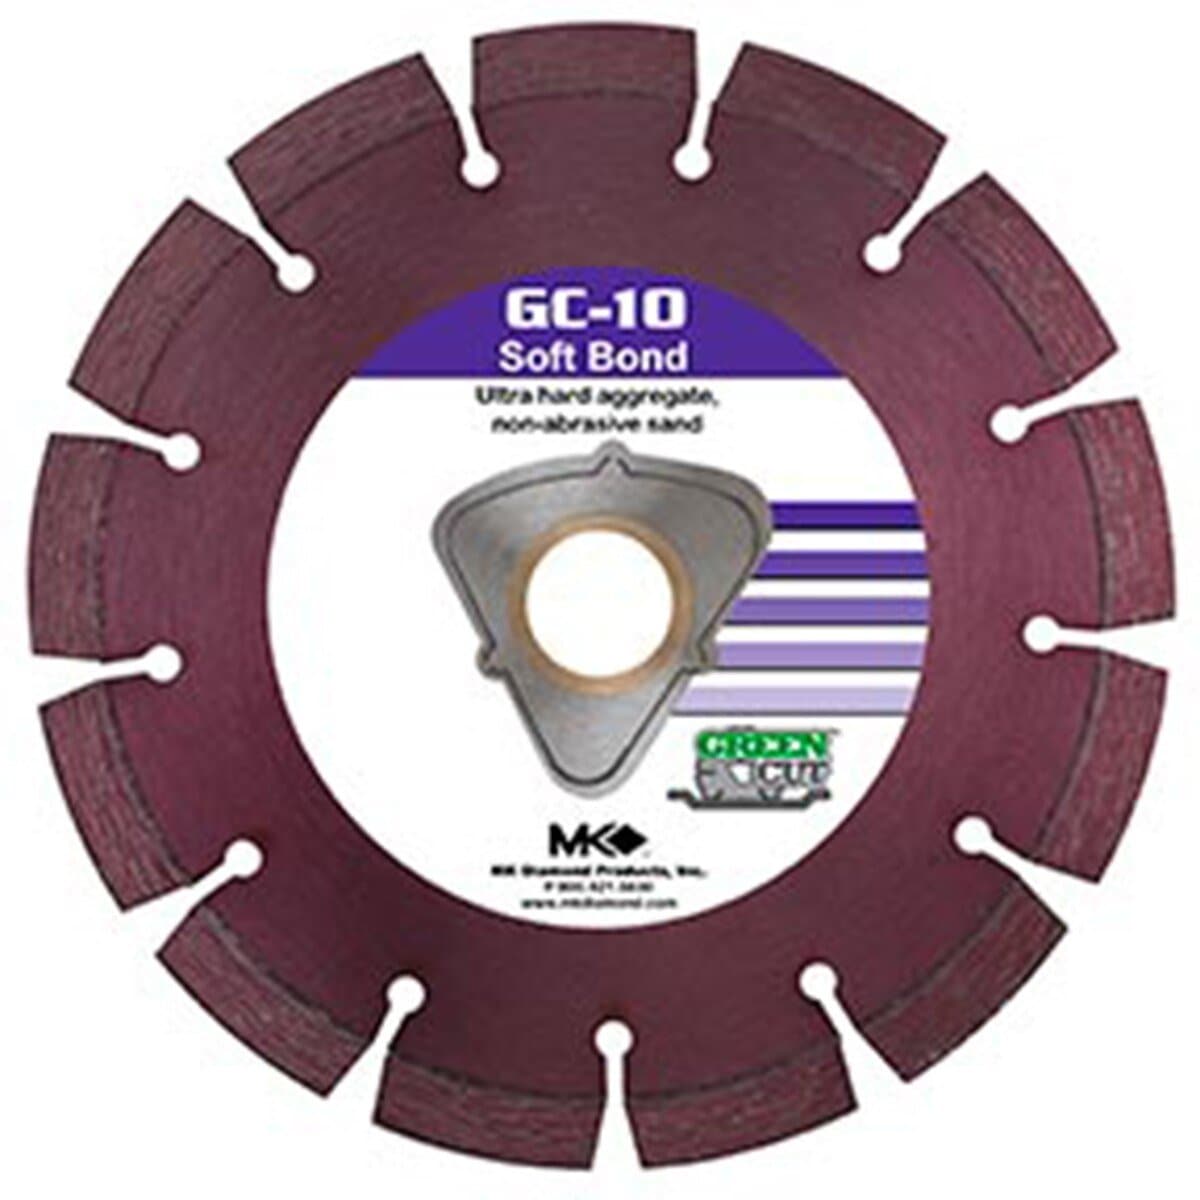 GC 10 Early Entry Green Concrete Blades - Ultra Hard Aggregate - MK Diamond